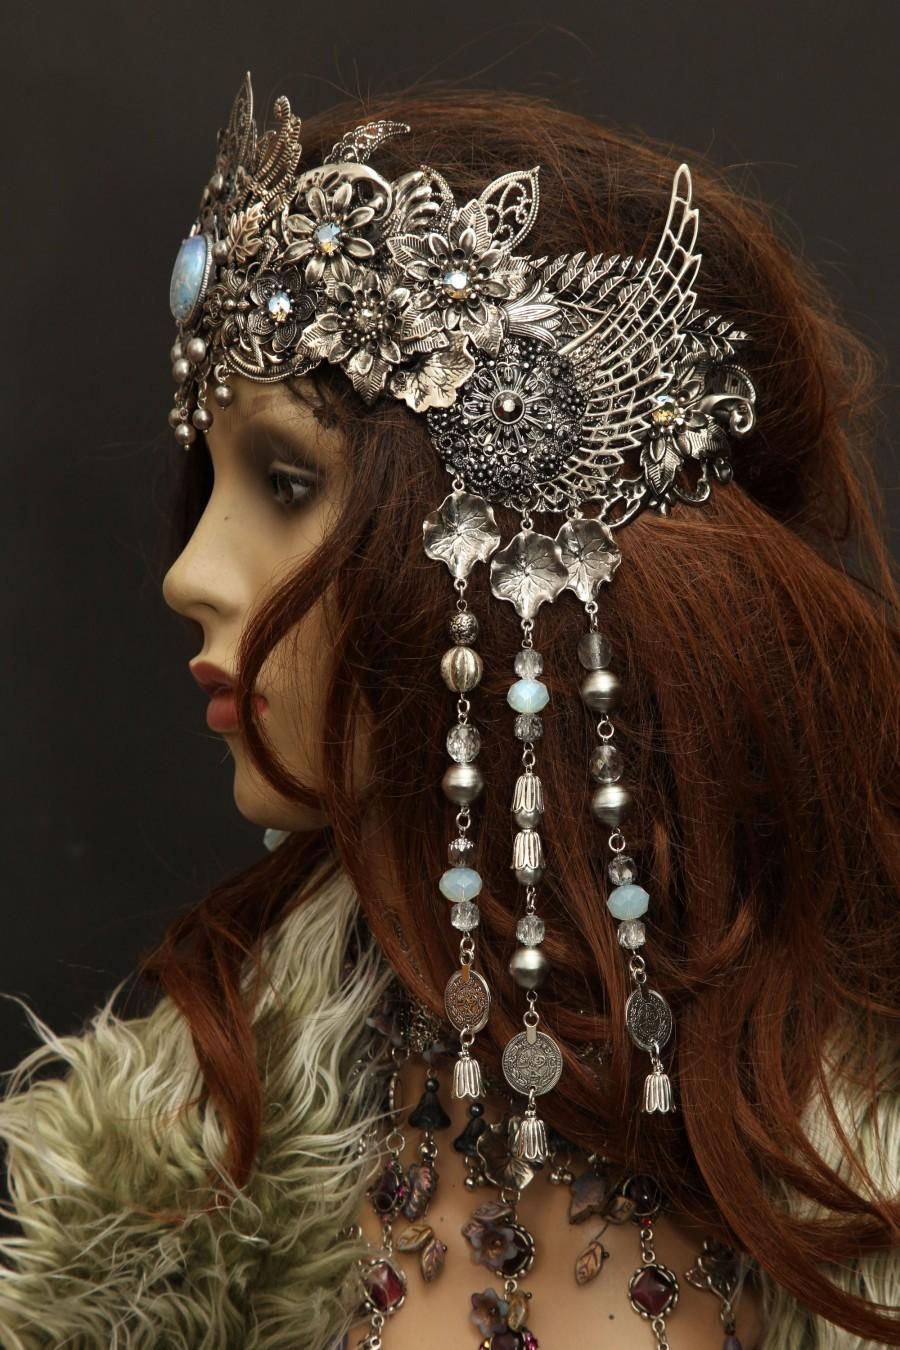 Hochzeit - Crescent moon kuchi art nouveau insp. elven nymph goddess tiara crown headpiece valkyre wings white opal cabochon leaves lotus beaded chains